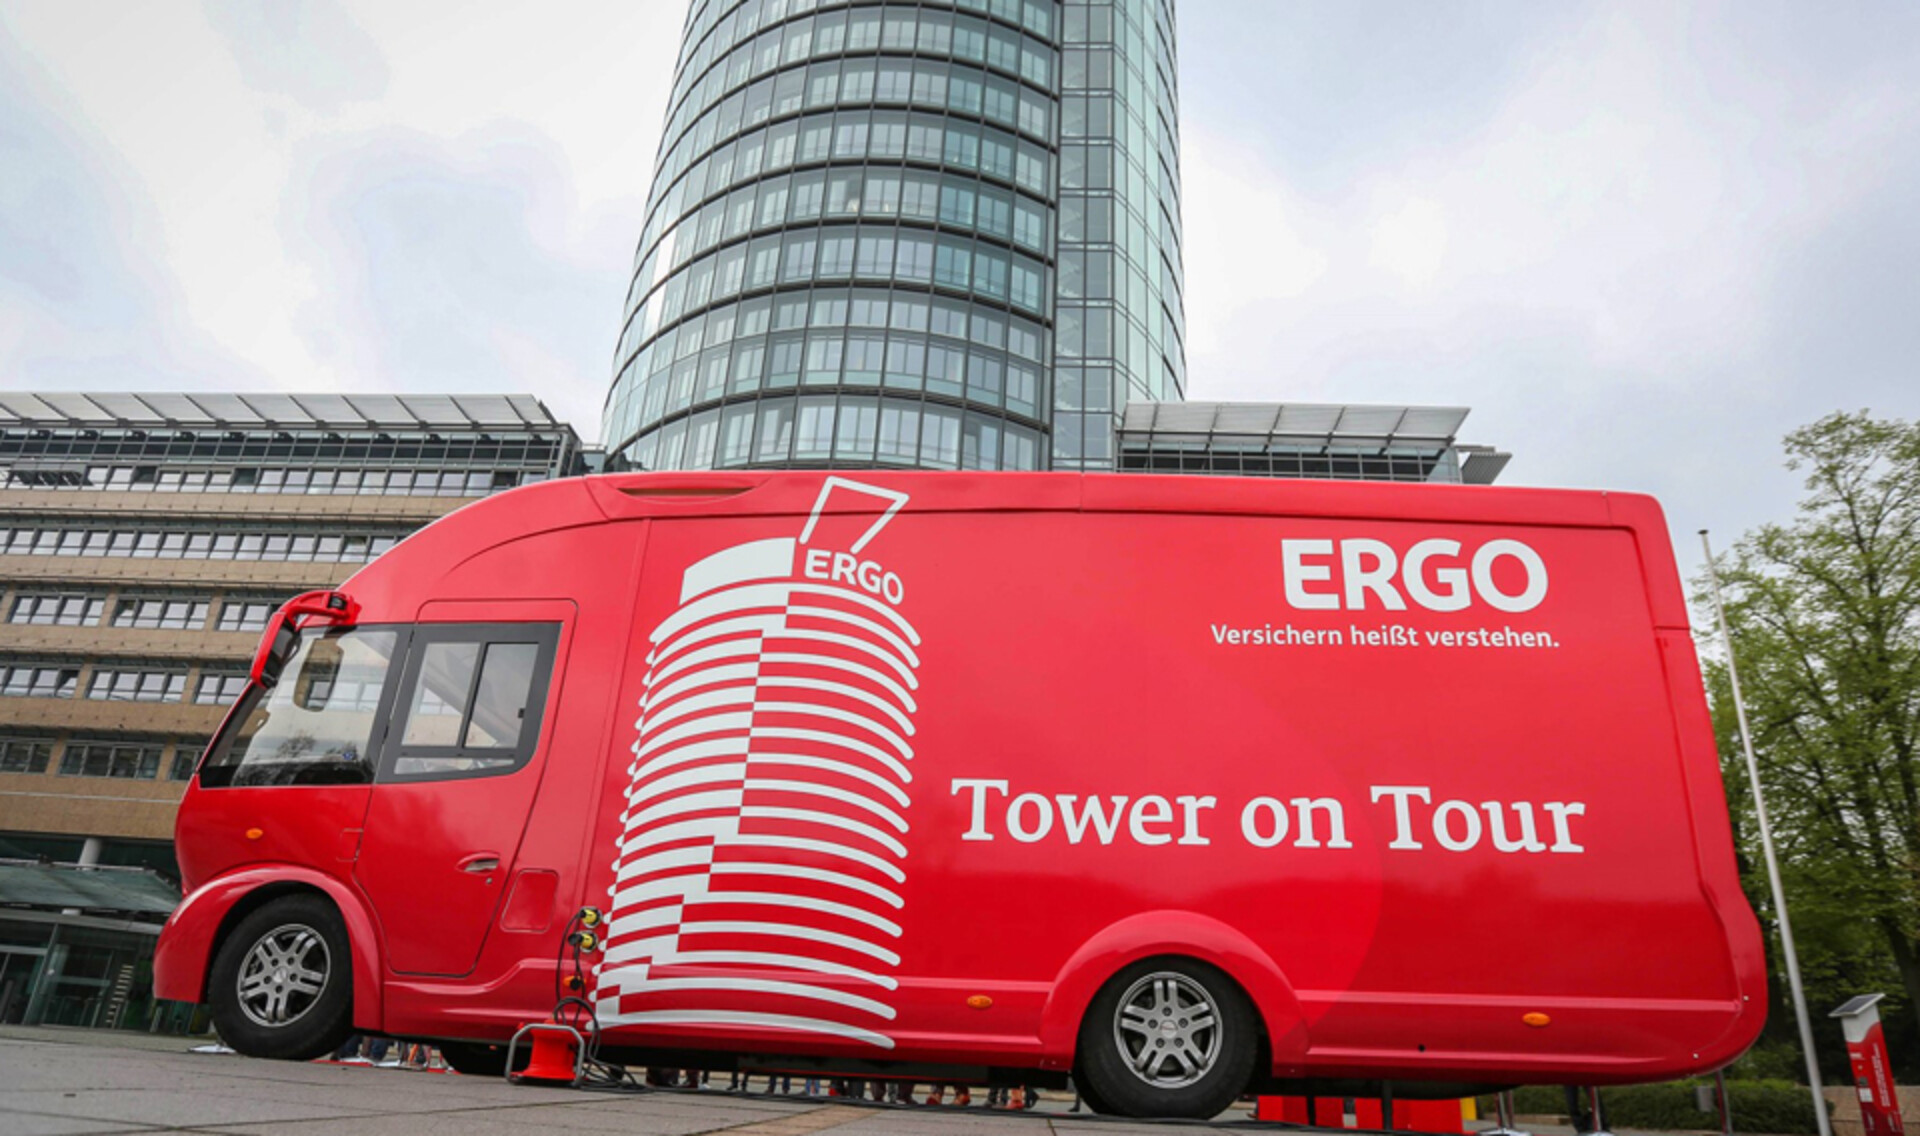 ergo-tower-on-tour-4-Infobus.jpg